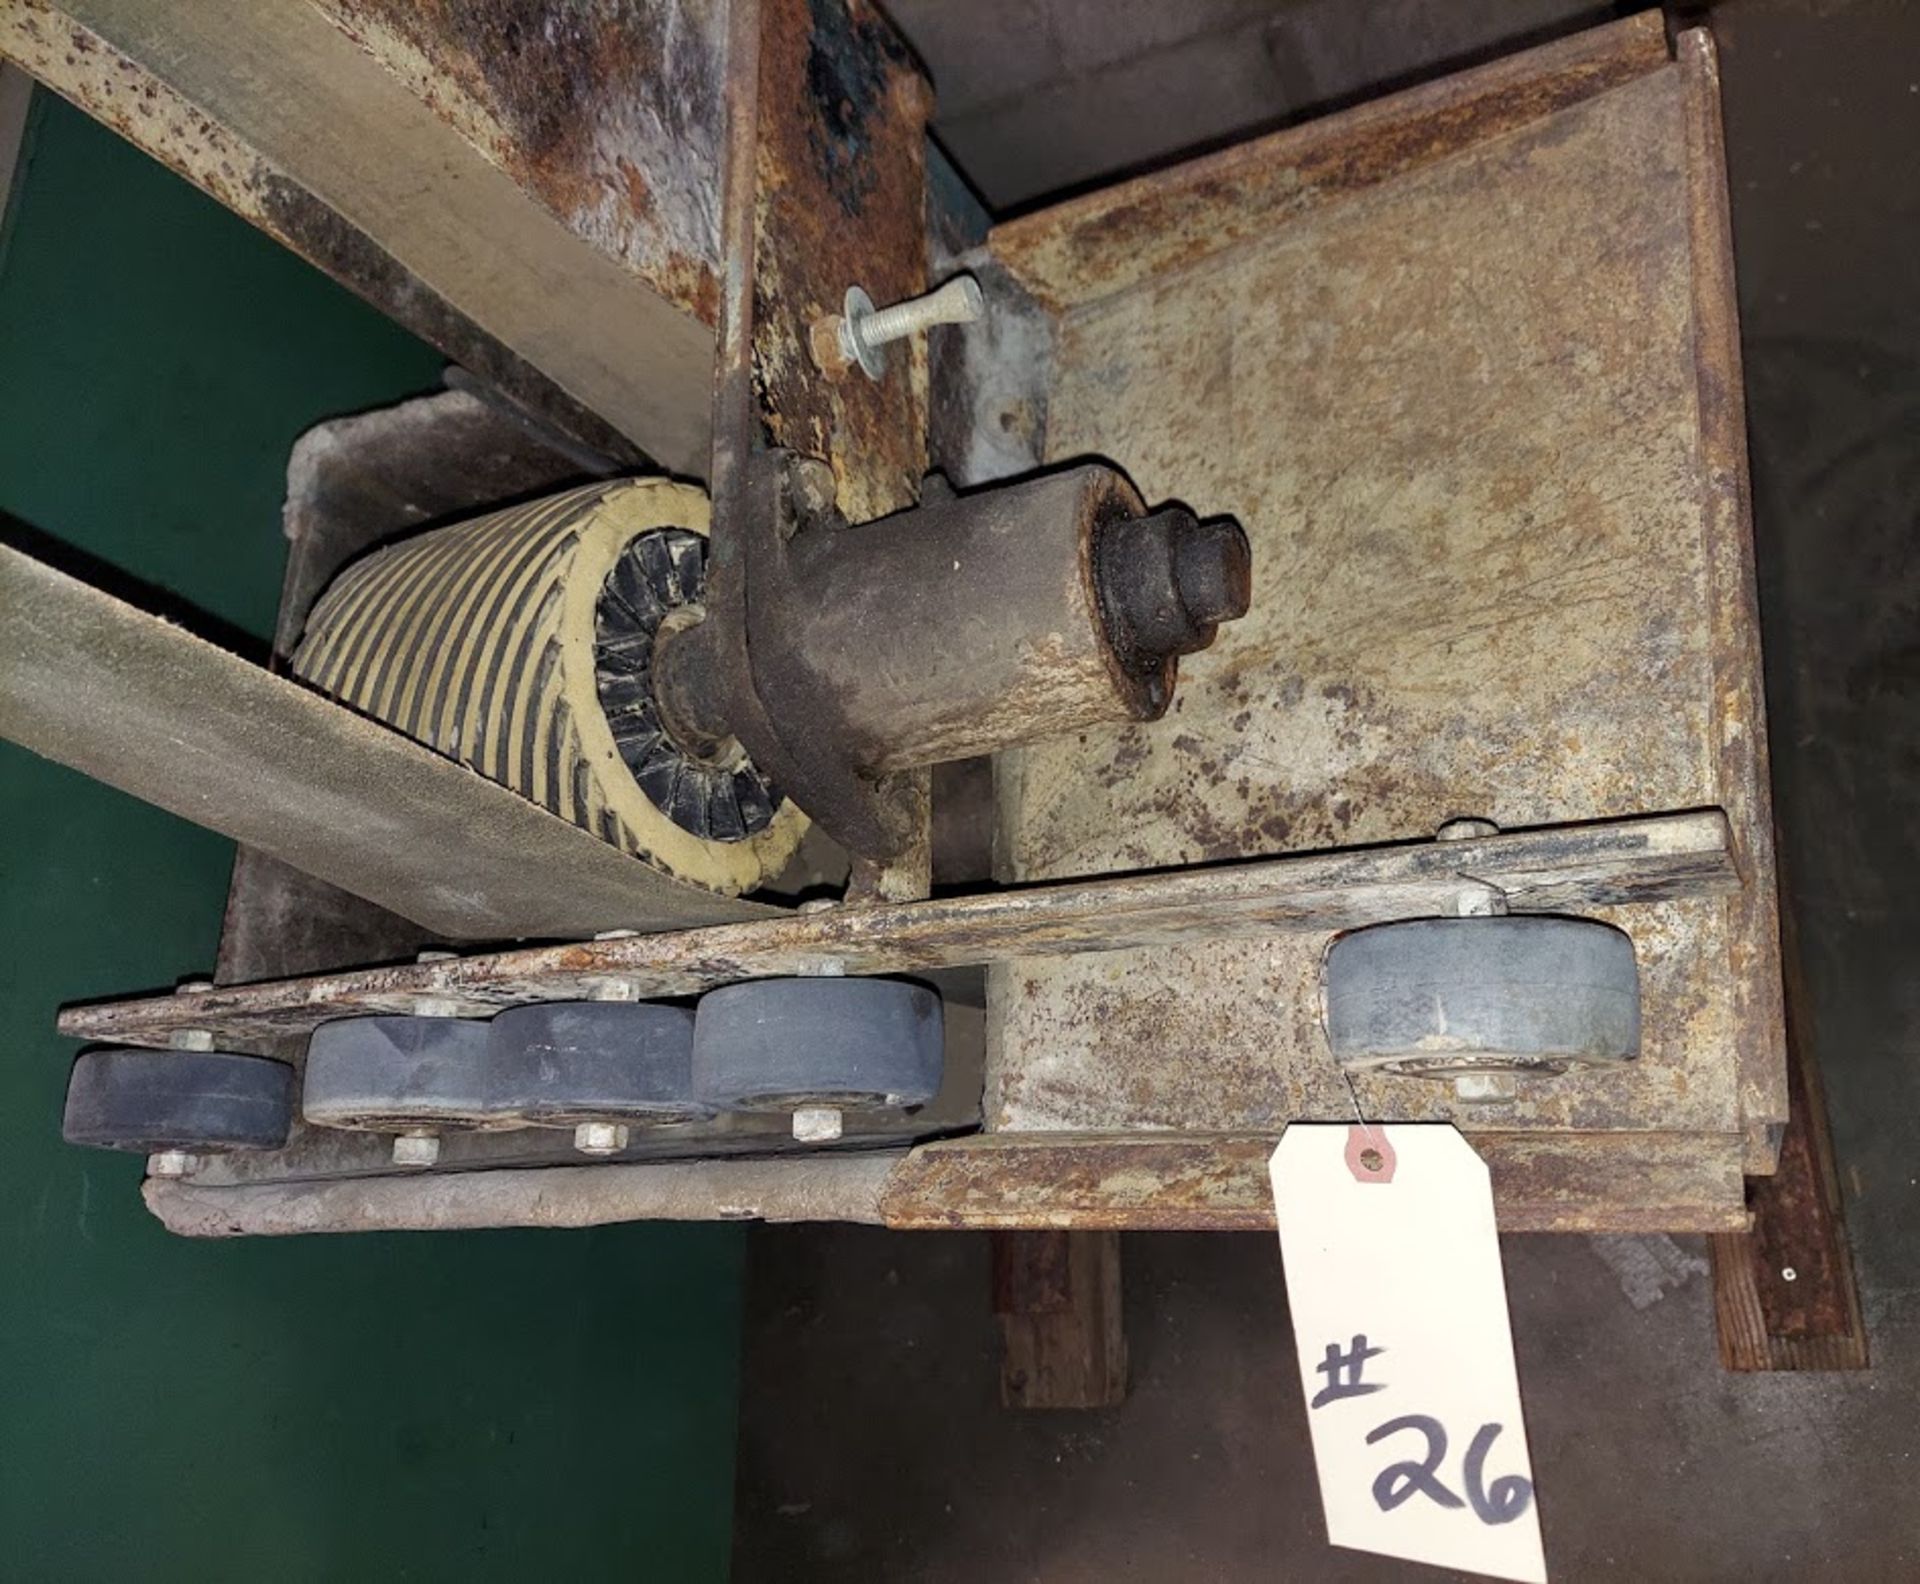 Somaca 106" Wet Abrasive Belt Machine with Roller Platen, Model # BM-1060-RP, 115 Volts - Image 3 of 4